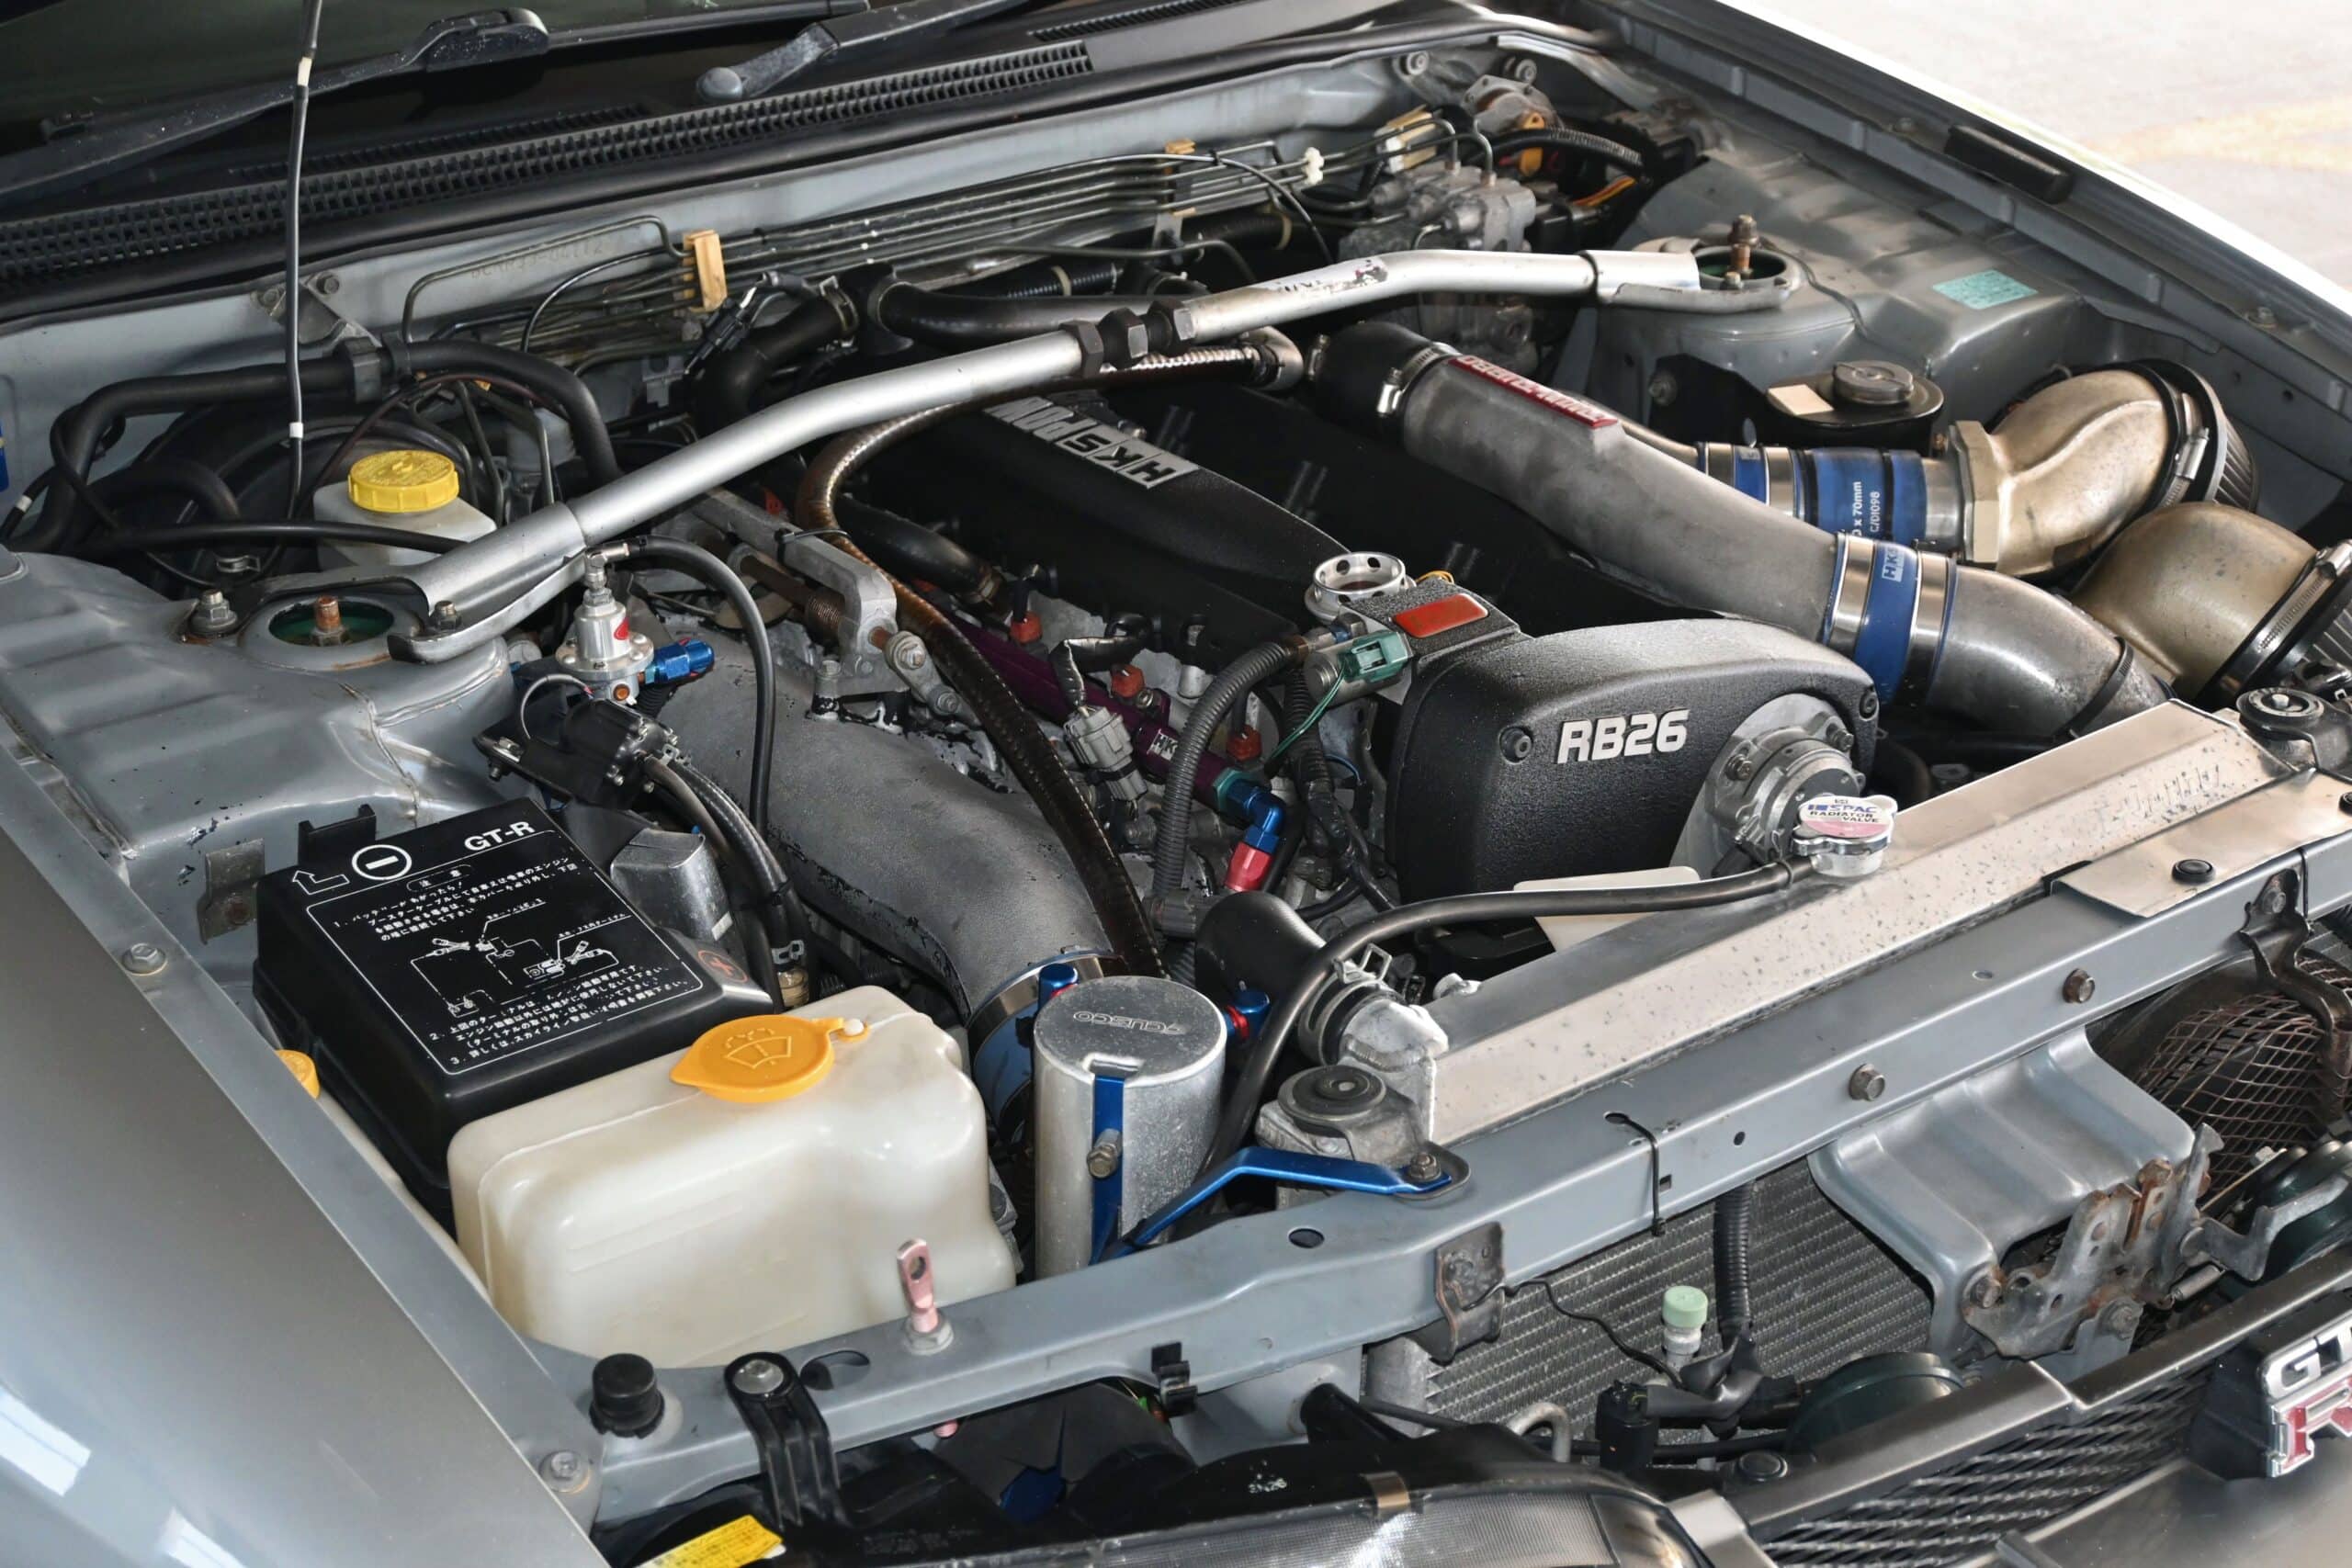 1997 Nissan Skyline GTR R33-500hp-HKS Vcams-HKS GT2530 Turbos-Tein Coilovers-Volk TE37